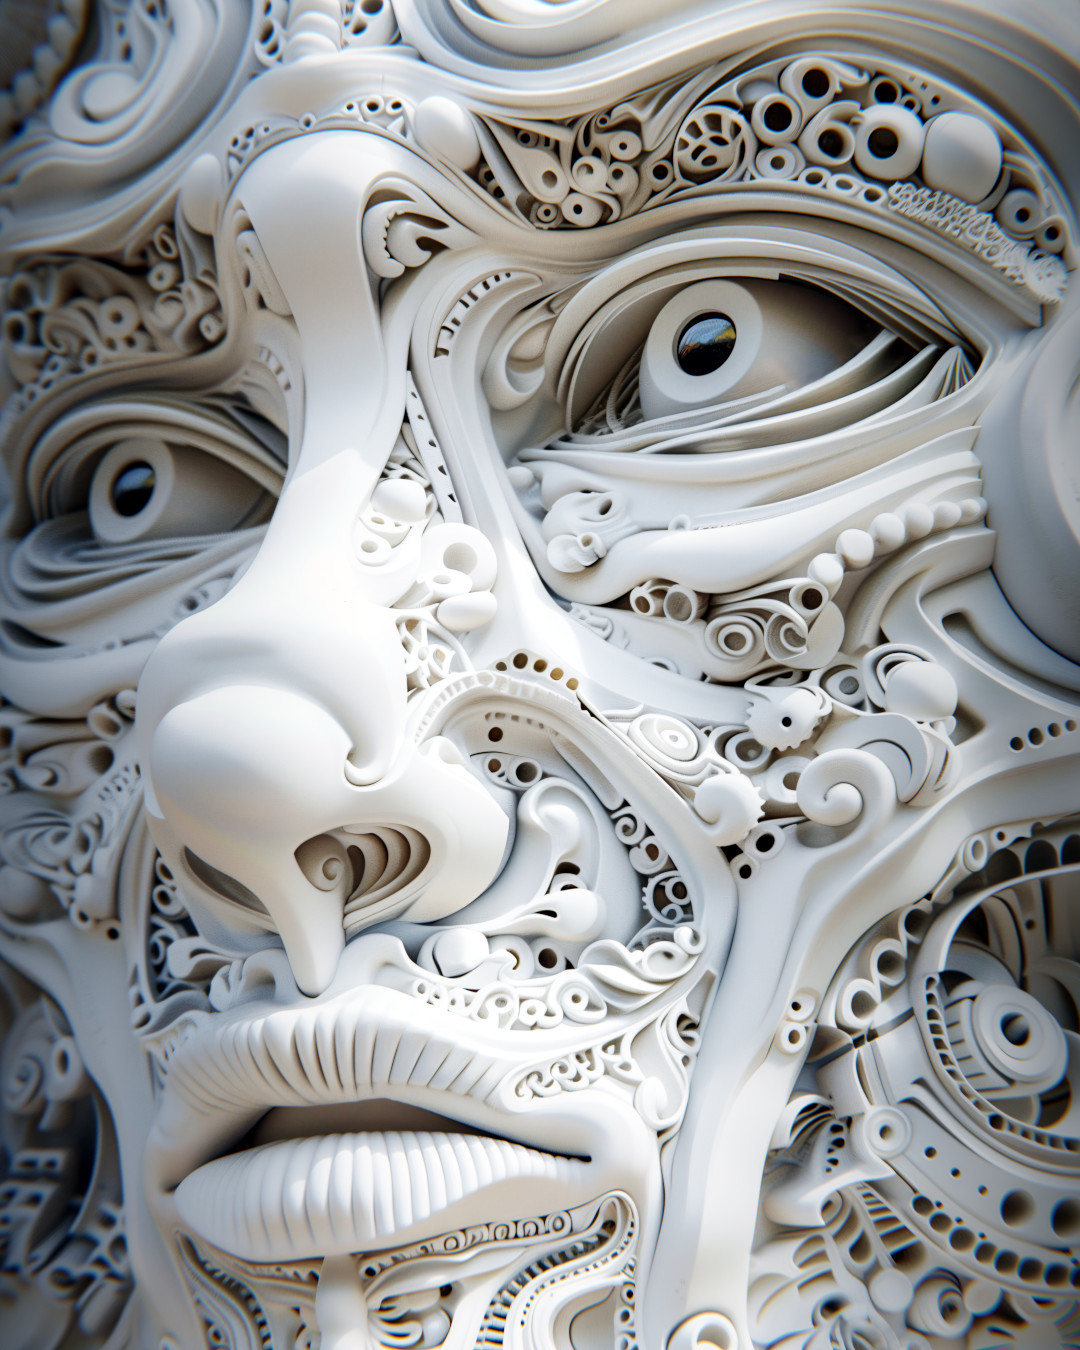 Intricate face, complex patterns, white sculpture